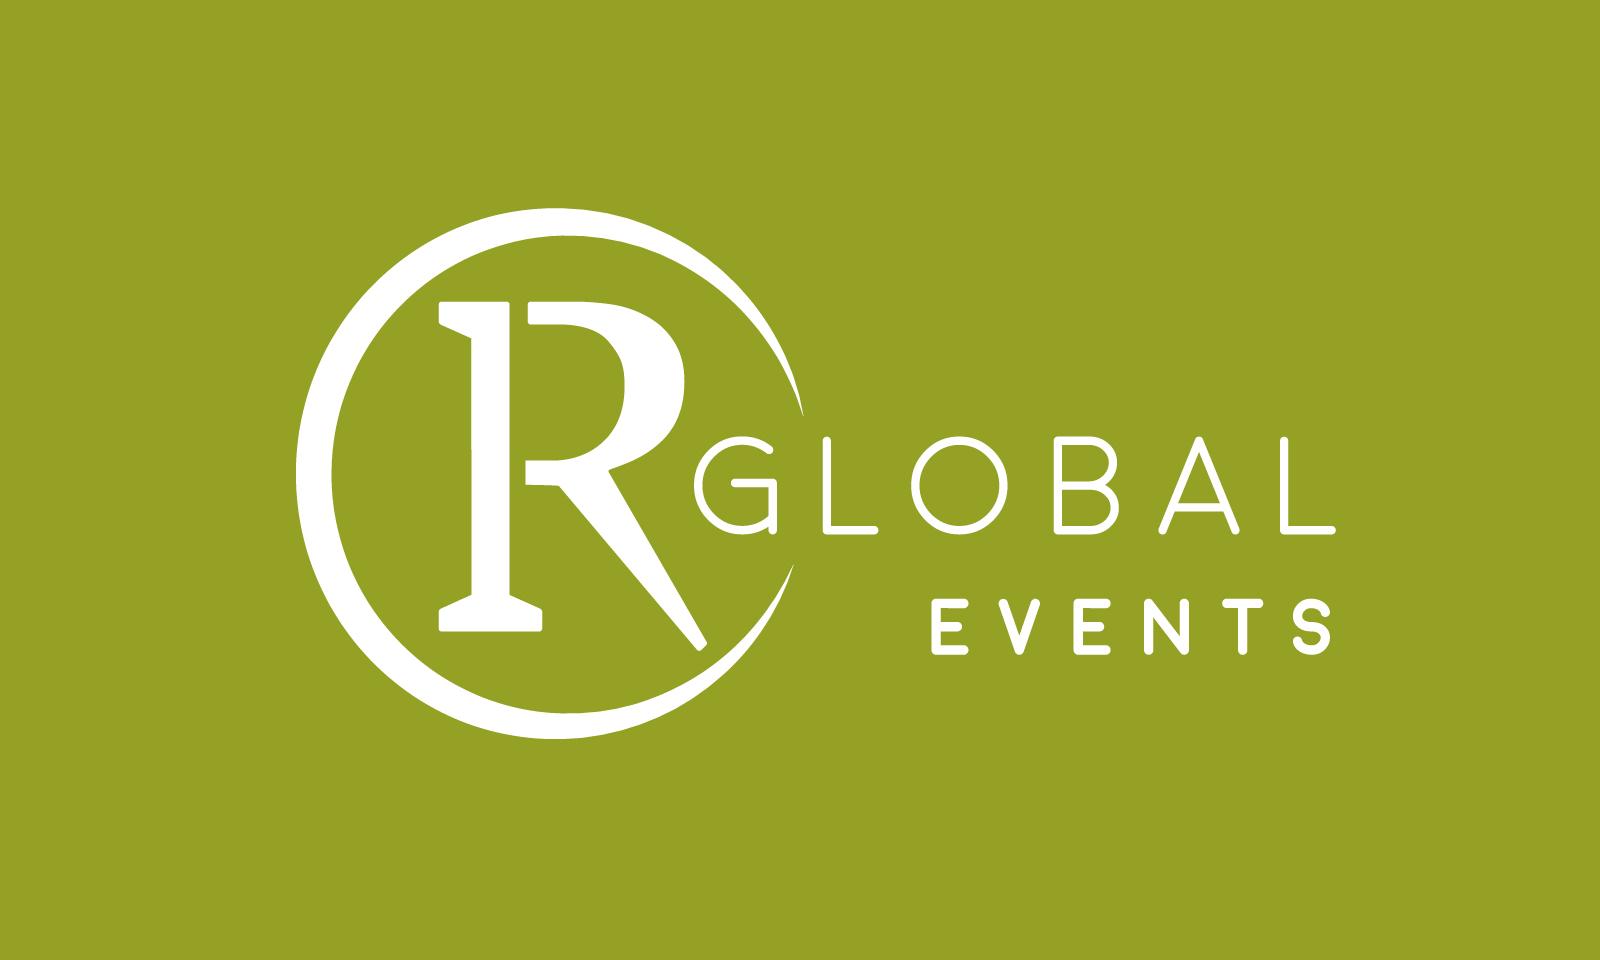 Global events. ООО "Глобал Эвентс".